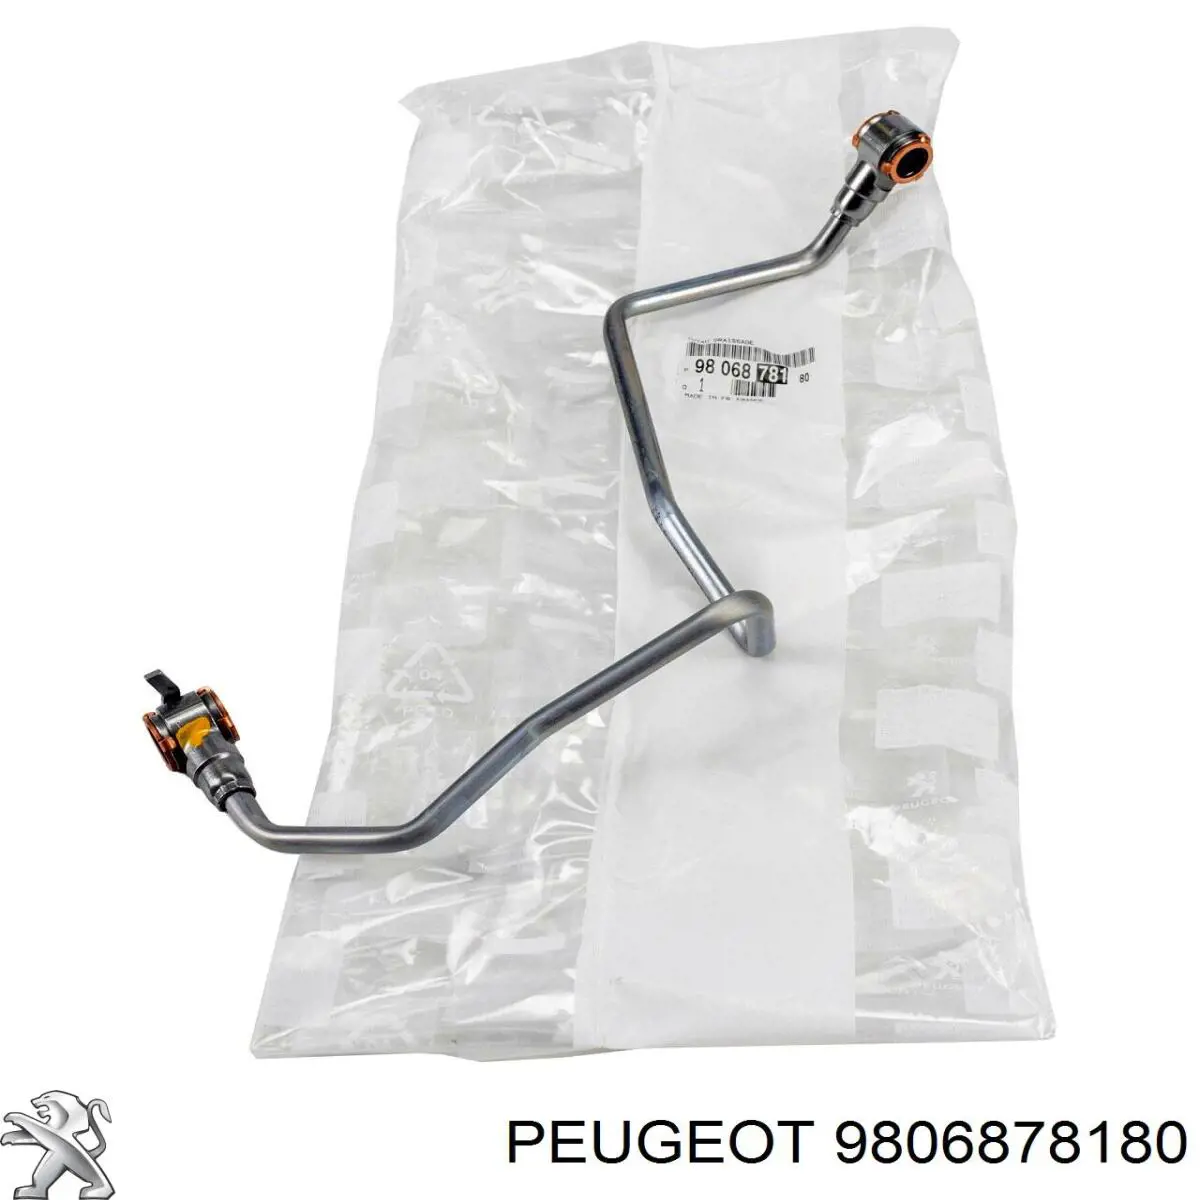 9806878180 Peugeot/Citroen tubo (mangueira de fornecimento de óleo de turbina)